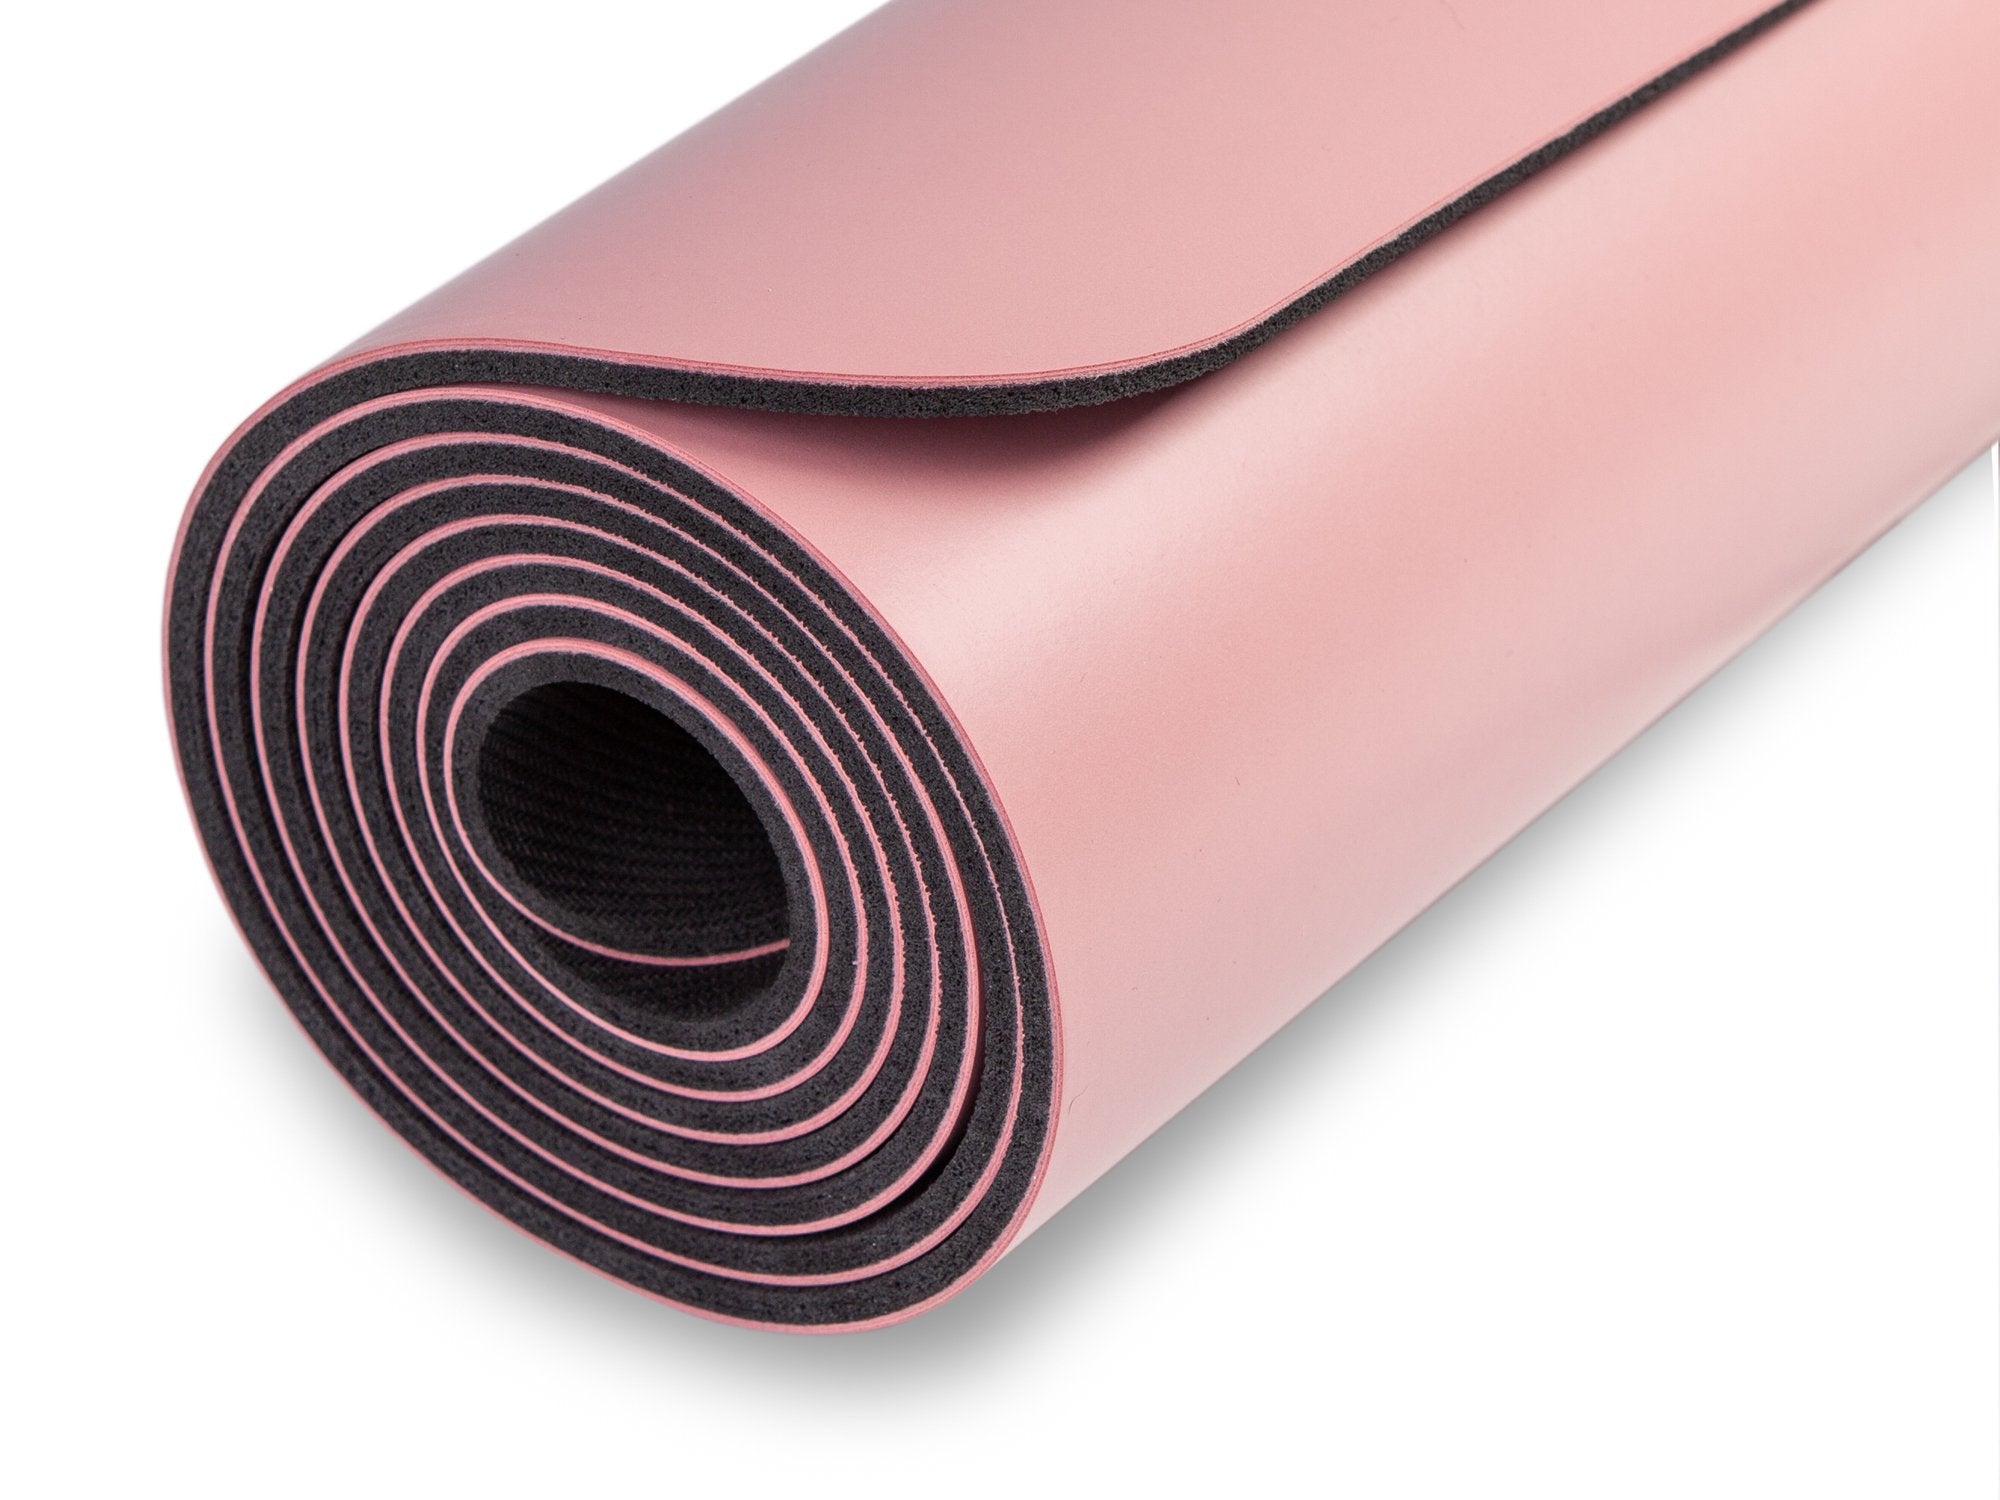 Mocana Nimbus Pink Yoga Mat